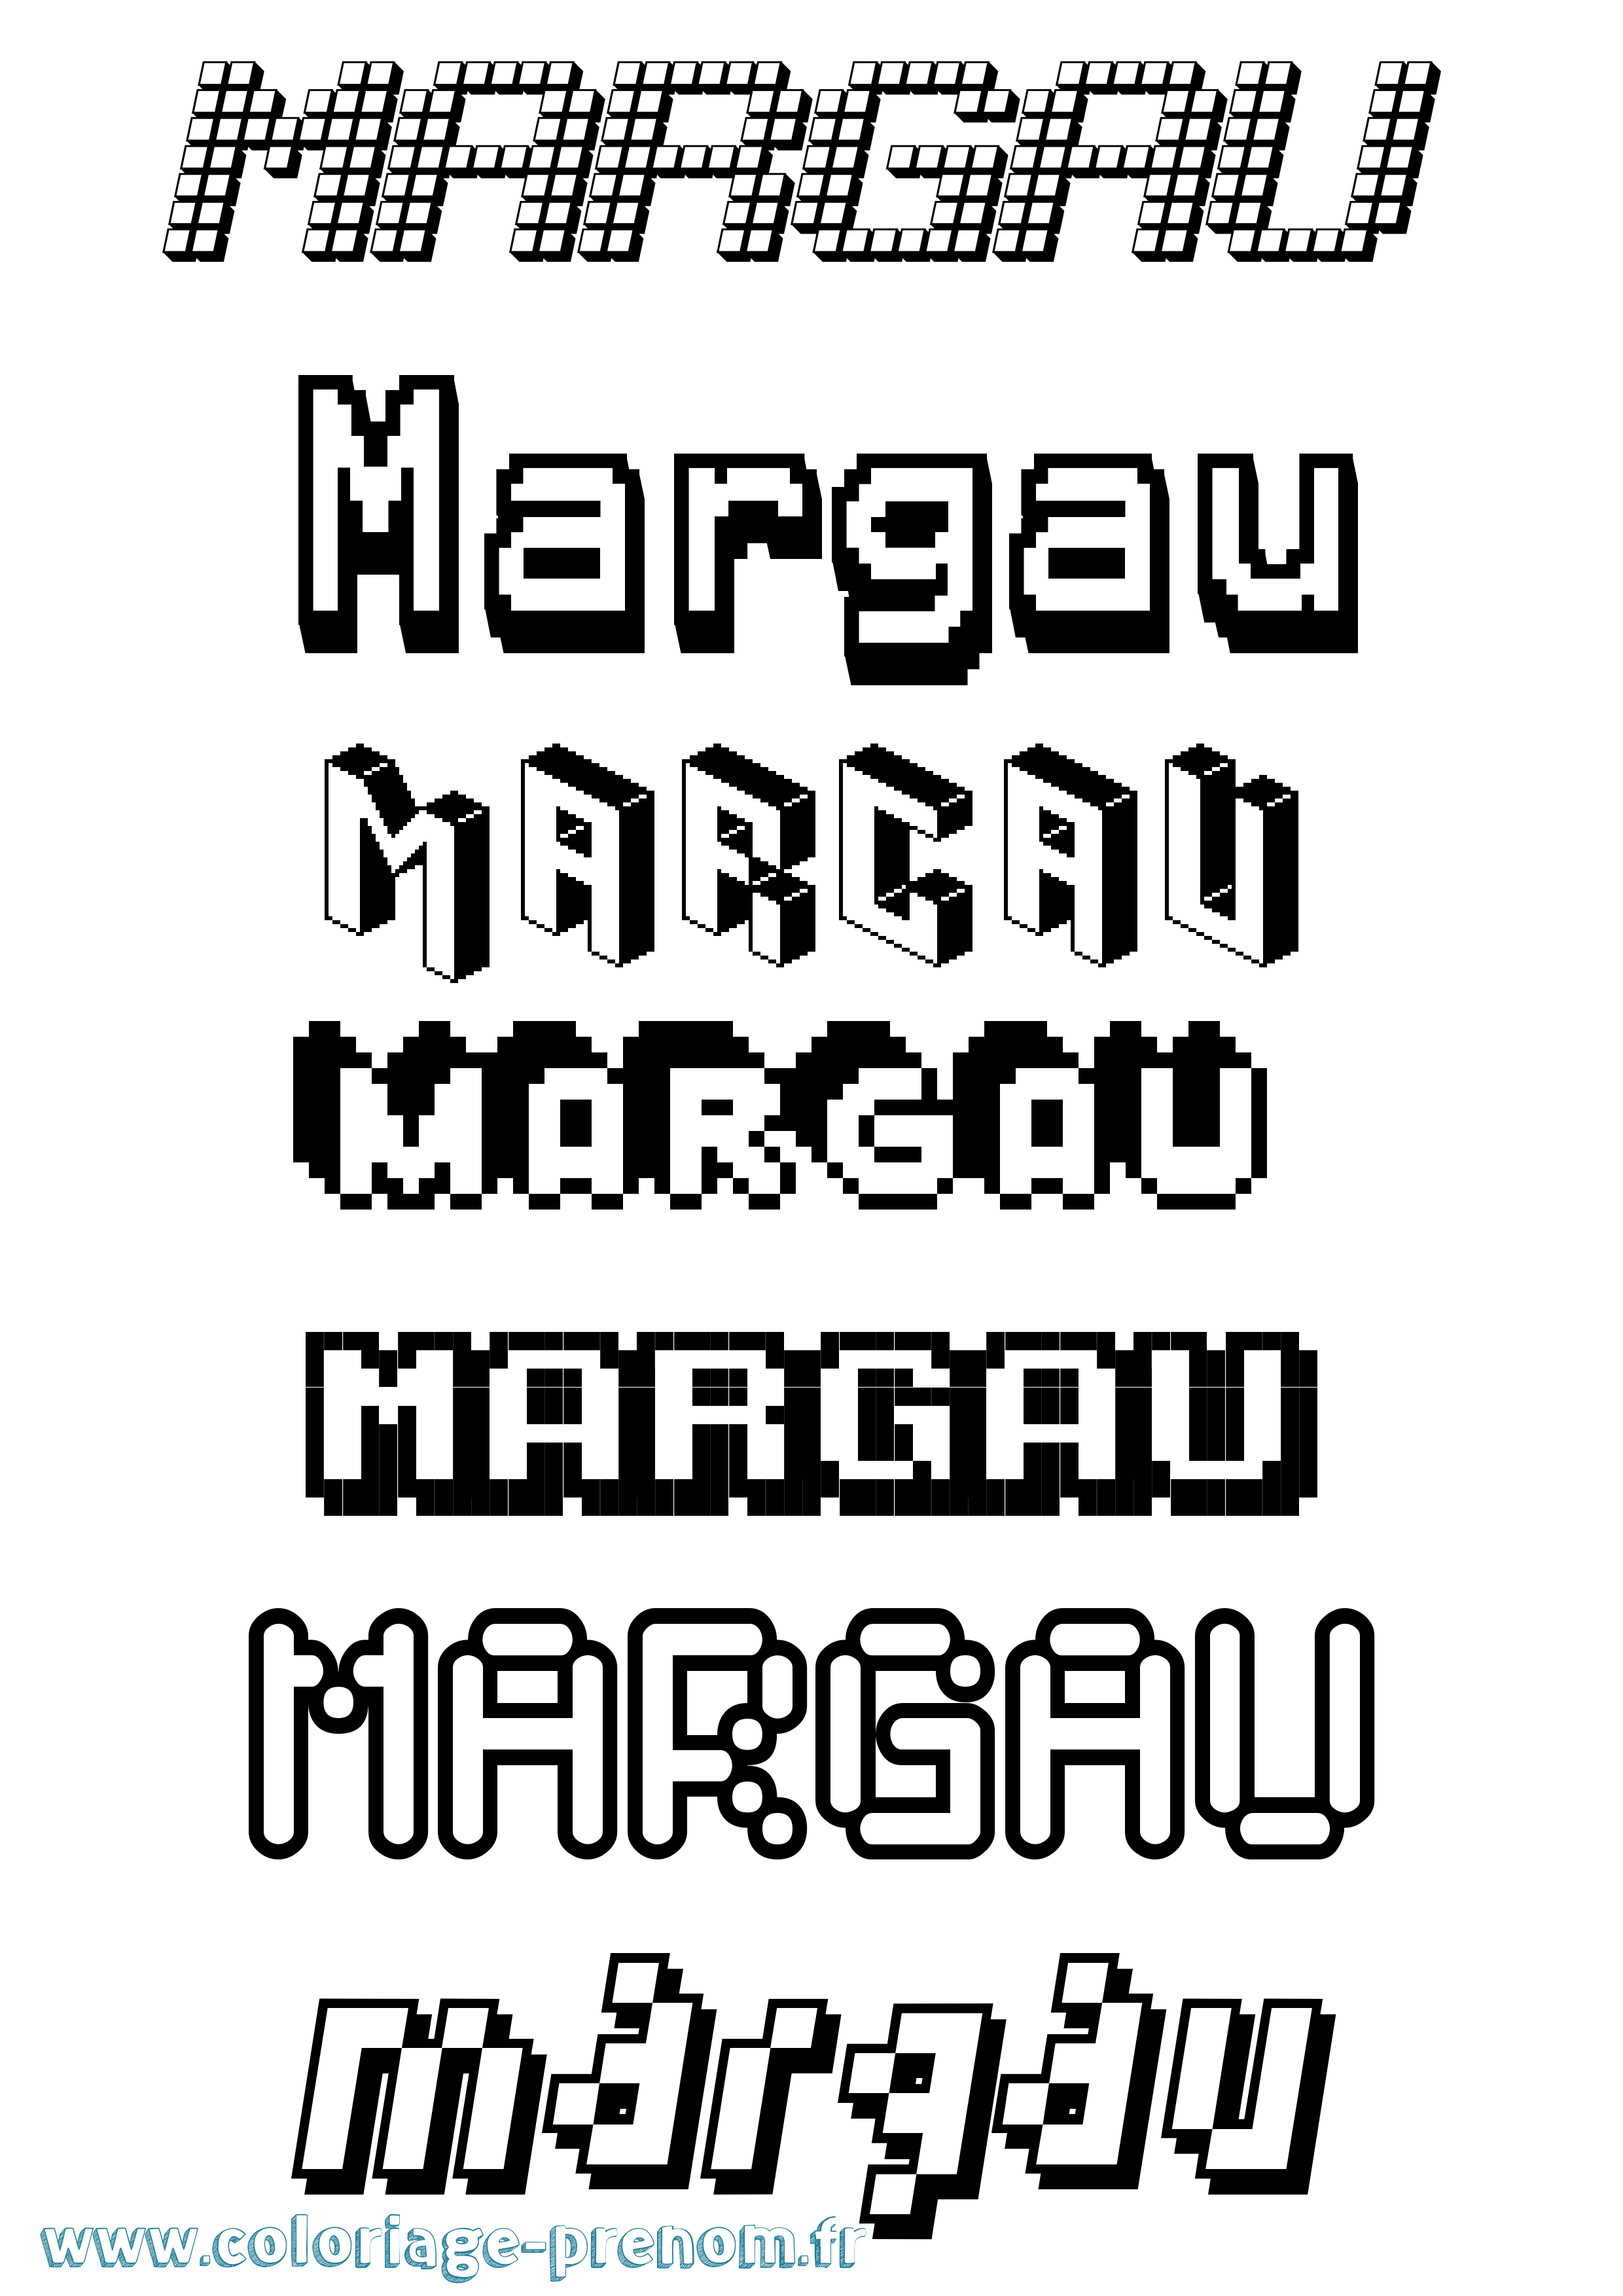 Coloriage prénom Margau Pixel